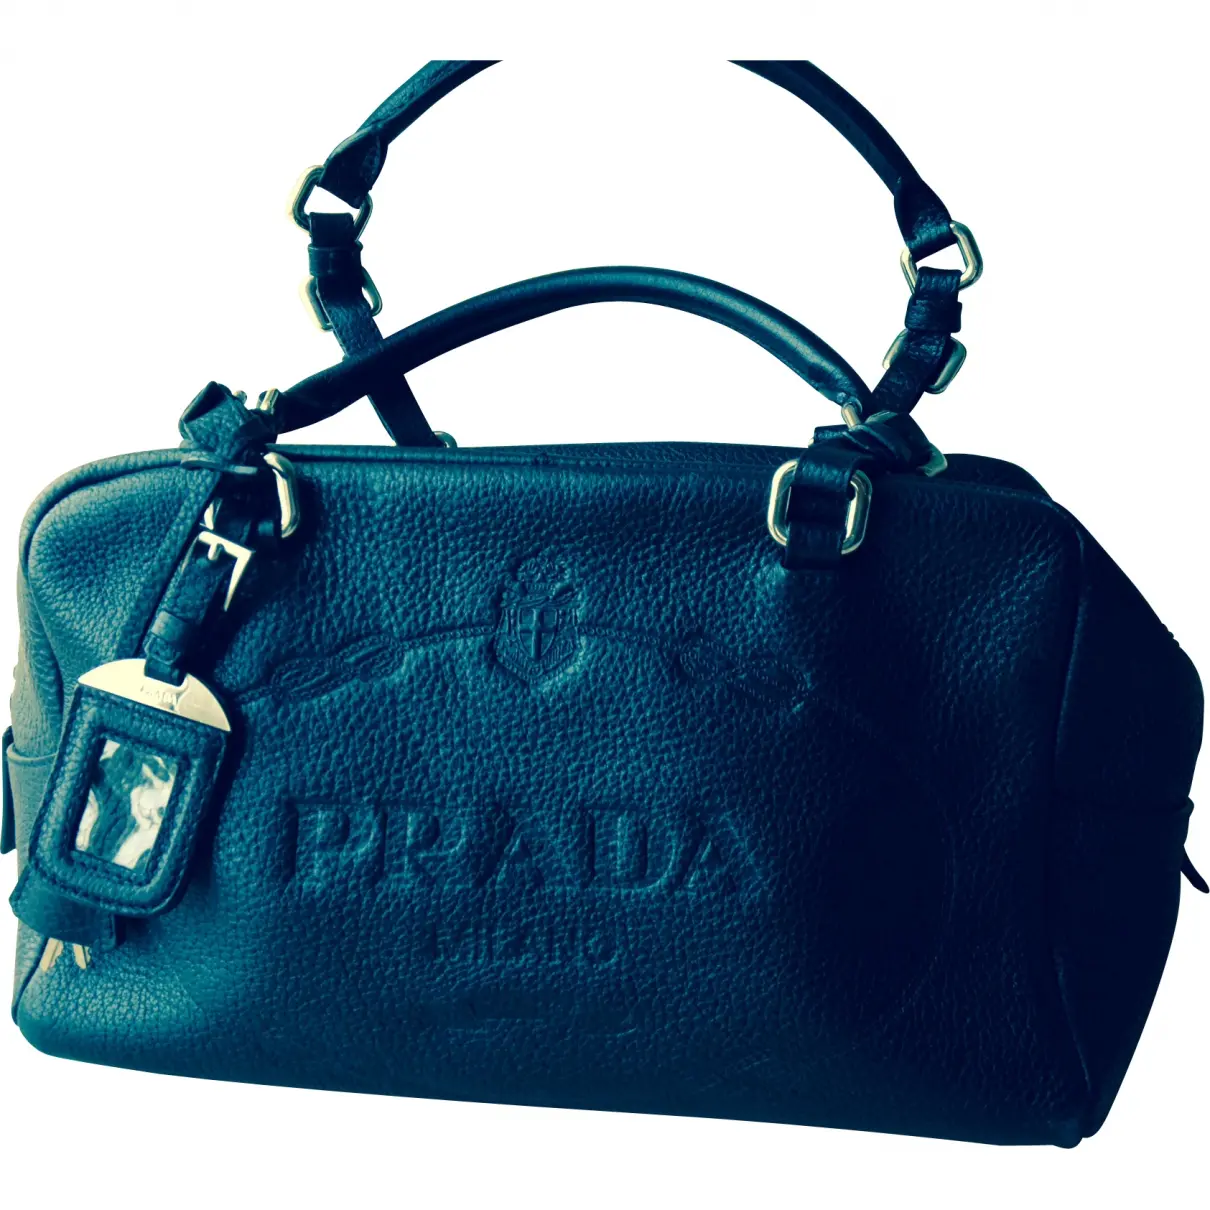 Black Leather Handbag Prada